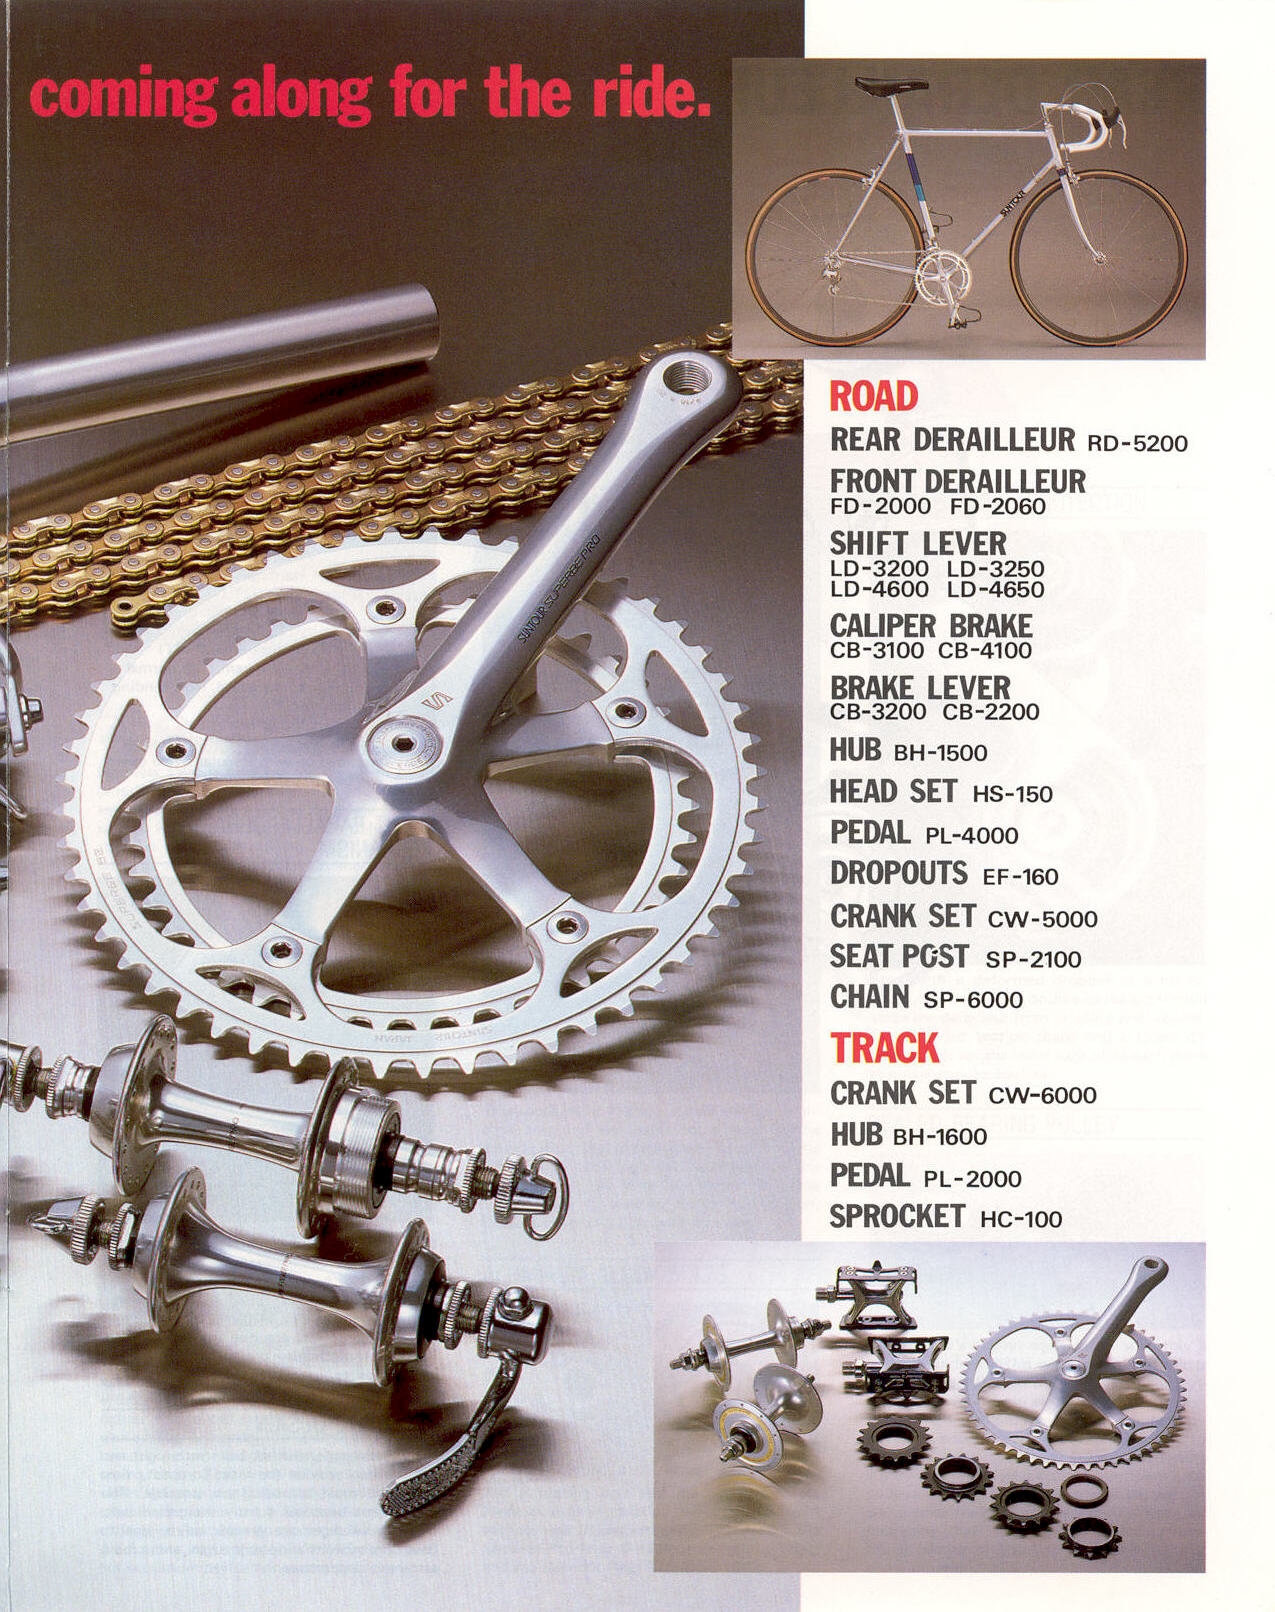 SunTour Superbe Pro catalog (11-1984)